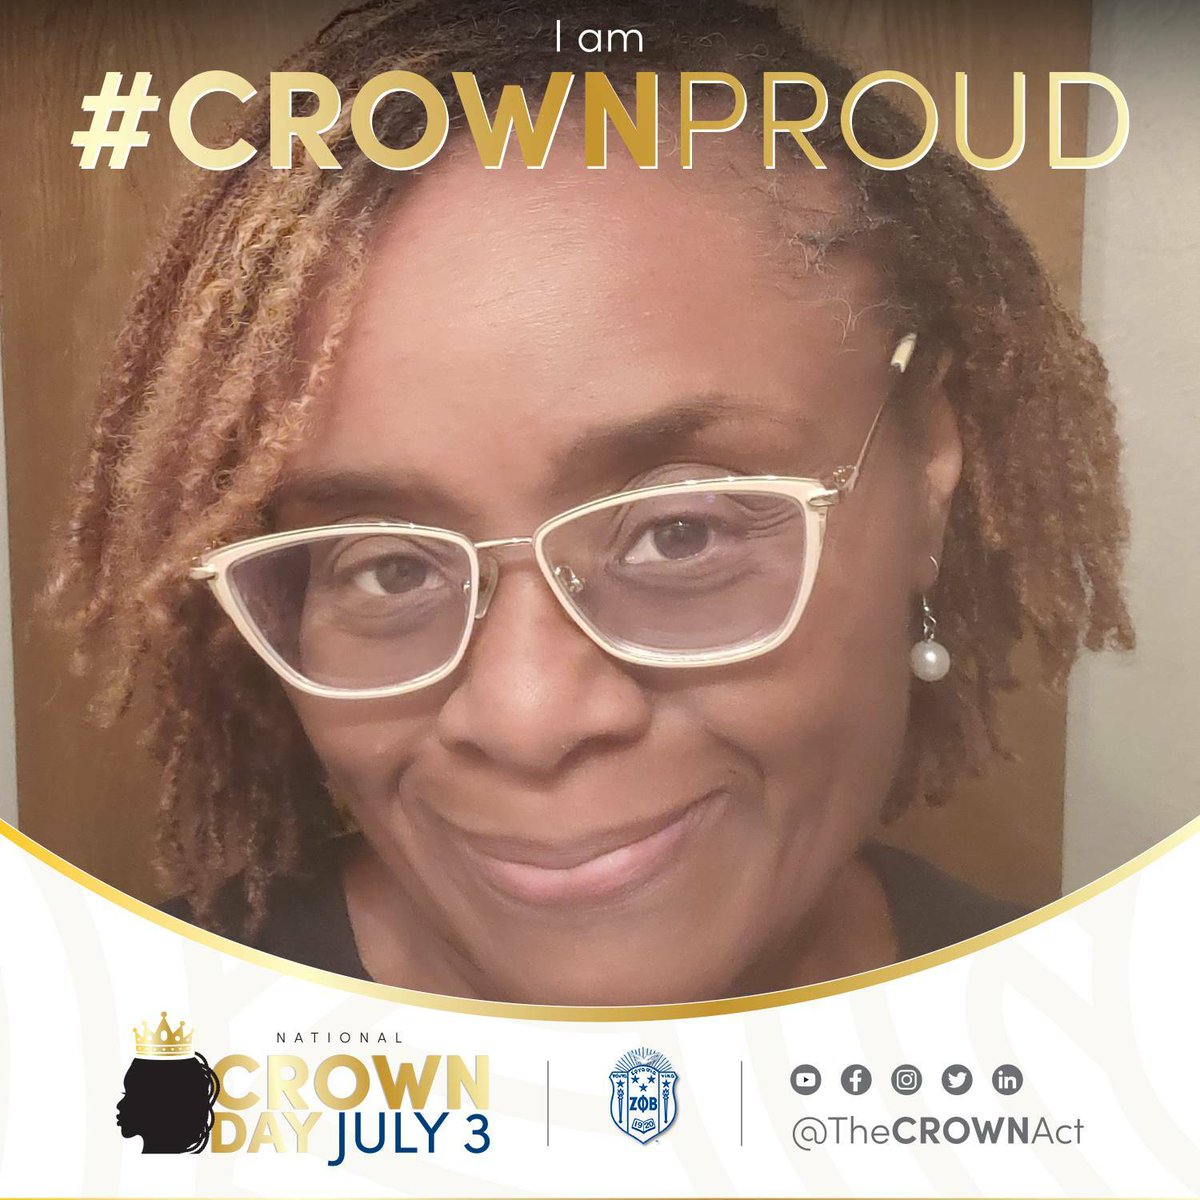 I am #CrownProud to celebrate National CROWN Day and the The CROWN Act .
#ZPhiB1920
#SouthernRegionZetas
#MightyExtraordinary
#kappazeta
#WestTexasZetas 
#greaterDallasZetas
@ms_ceskina95 @ZPHIBHQ